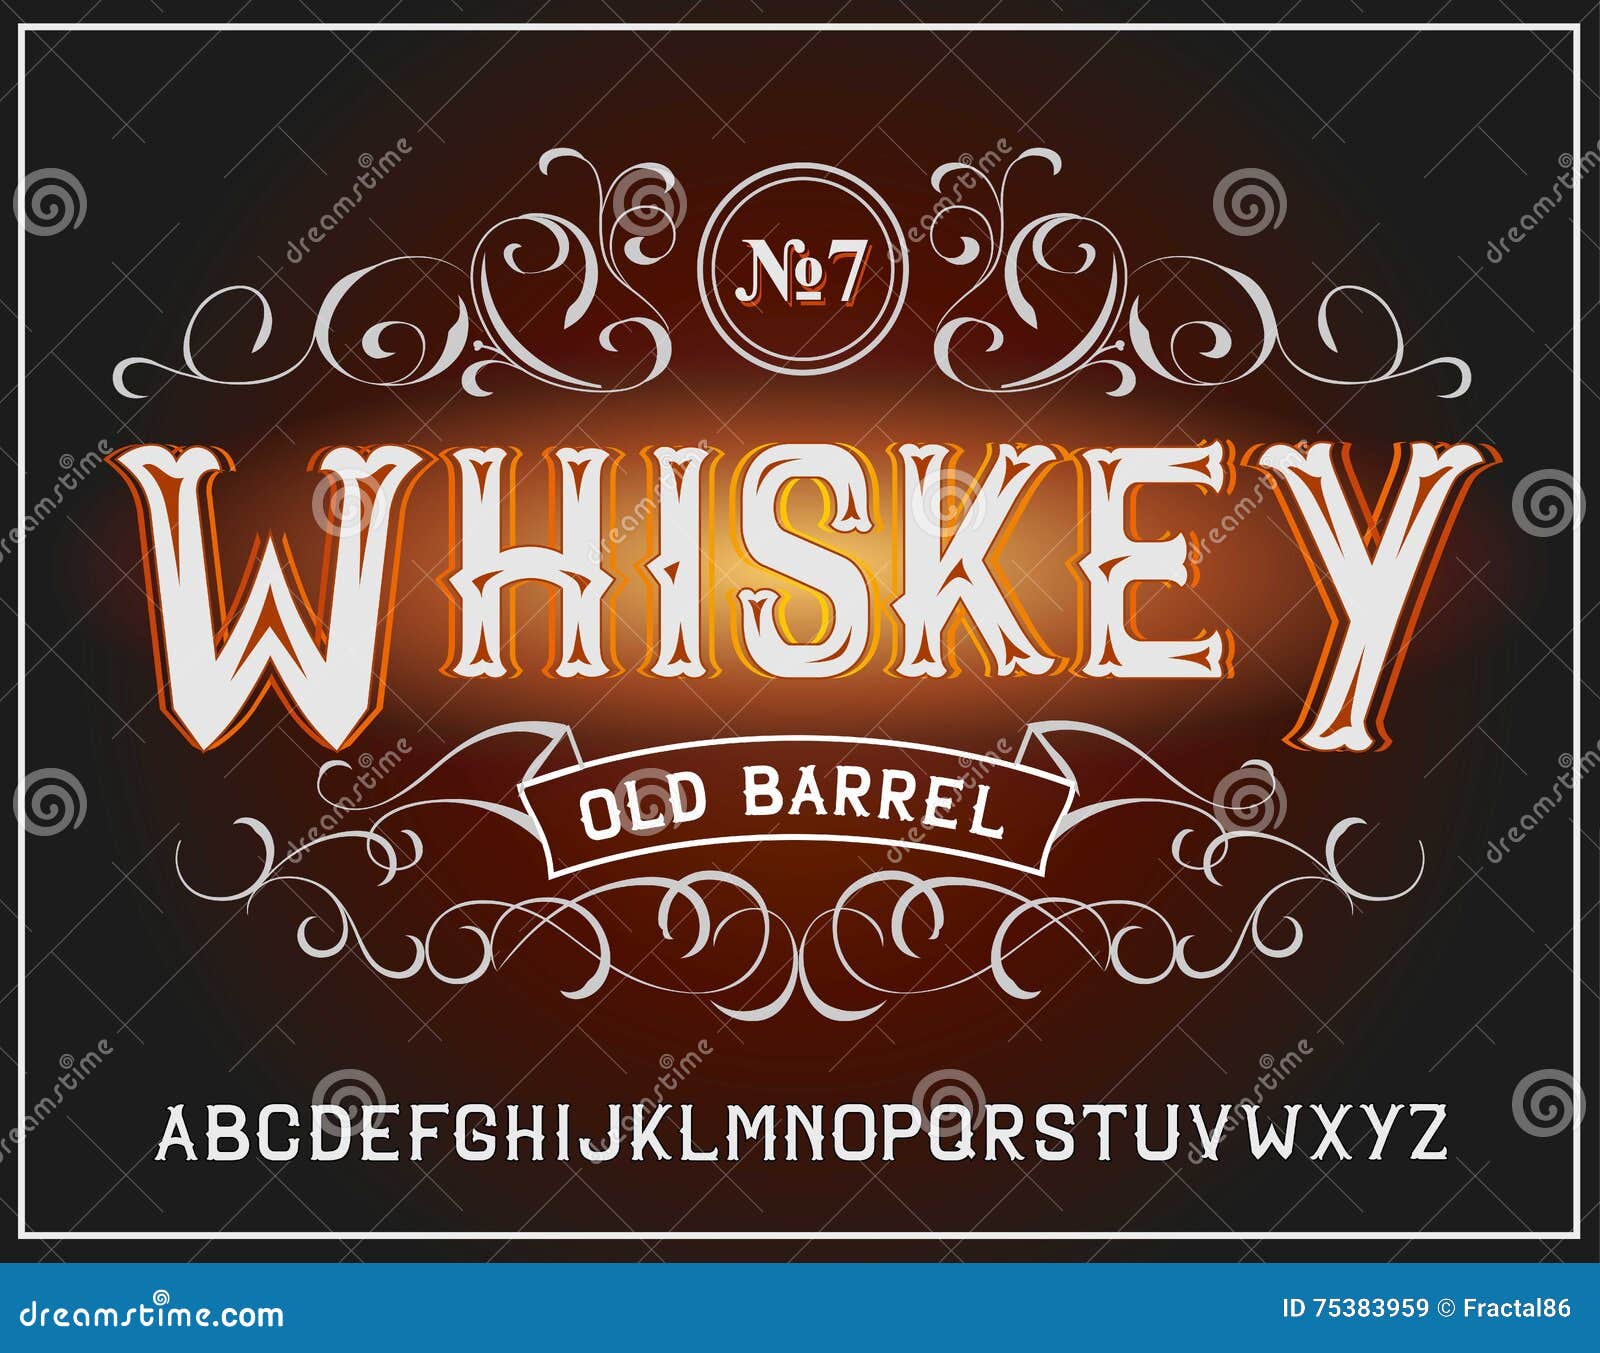  vintage label font. whiskey style